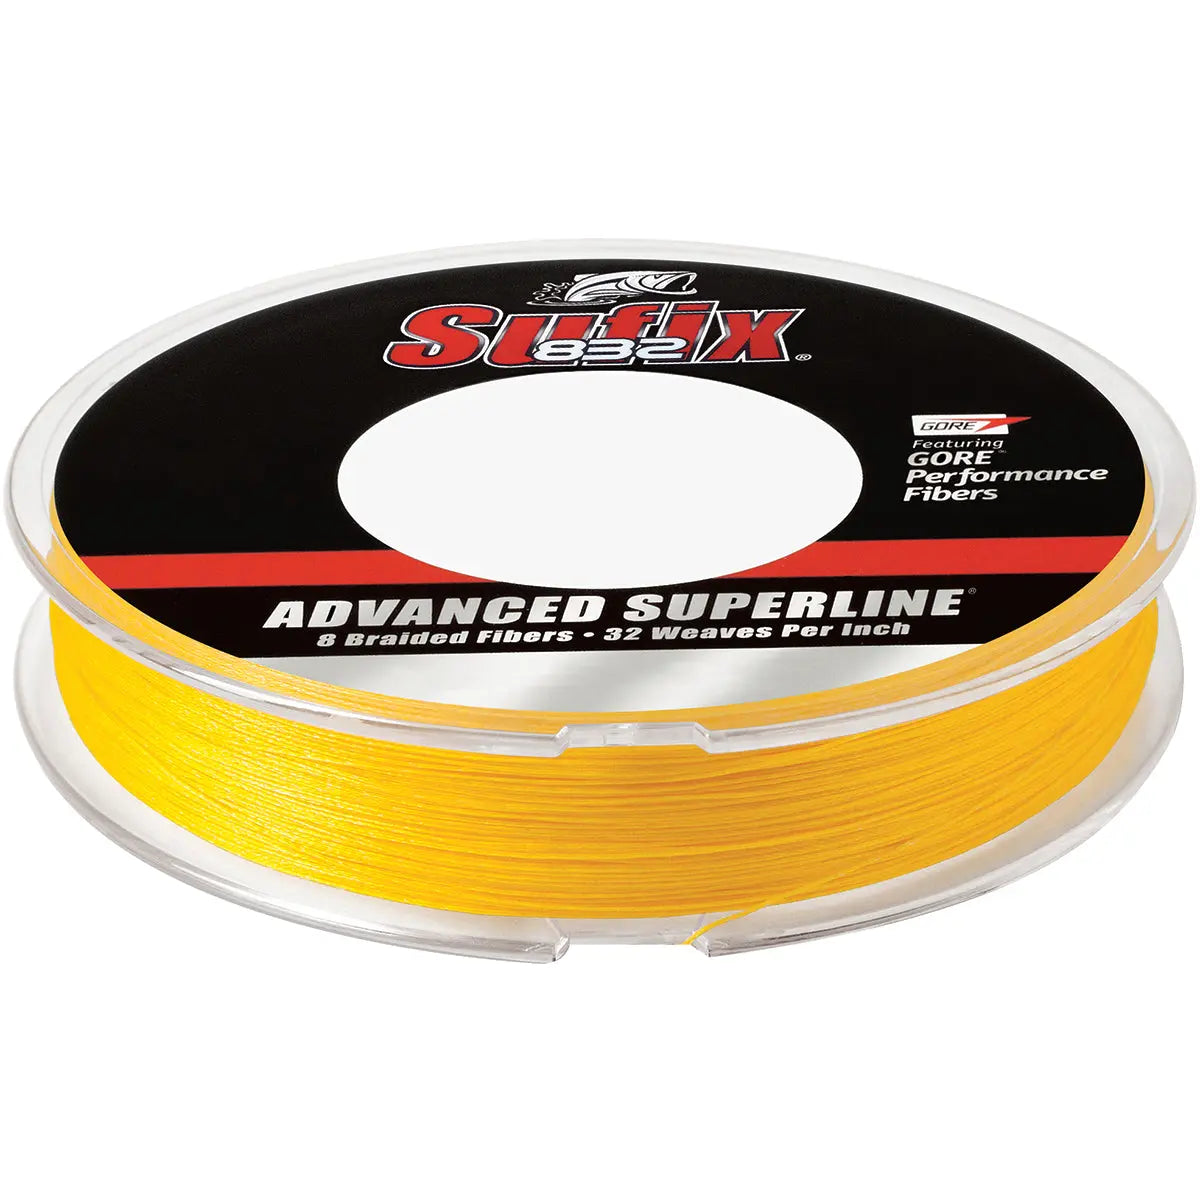 Sufix 150 Yard 832 Advanced Superline Braid Fishing Line - 10 lb. - Hi-Vis Yellow Sufix